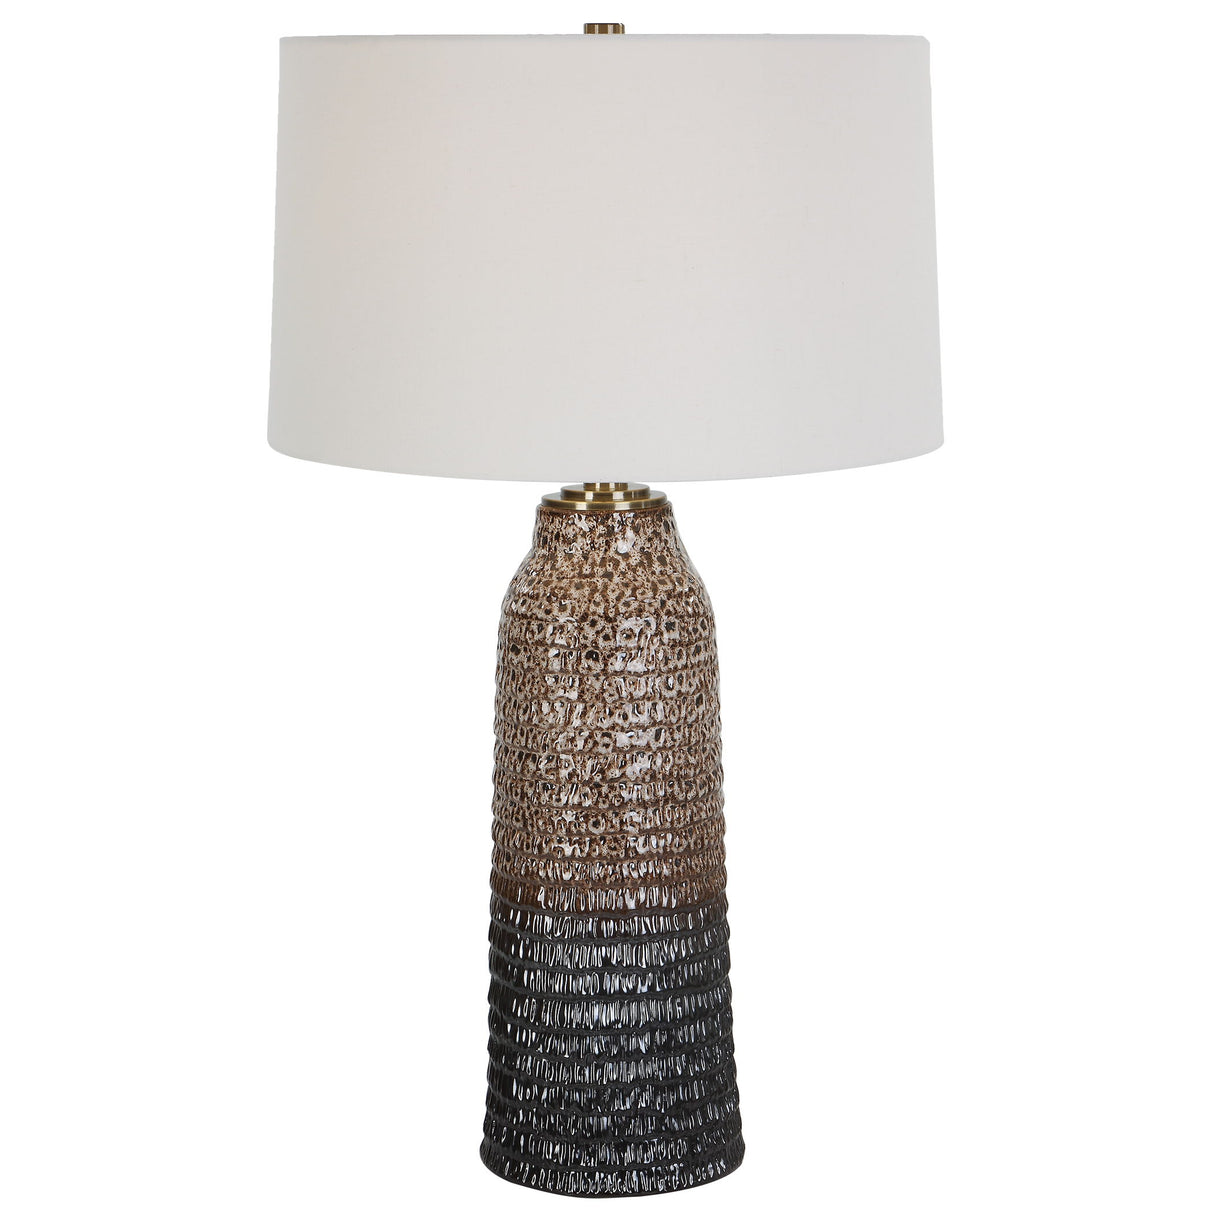 Padma - Mottled Table Lamp